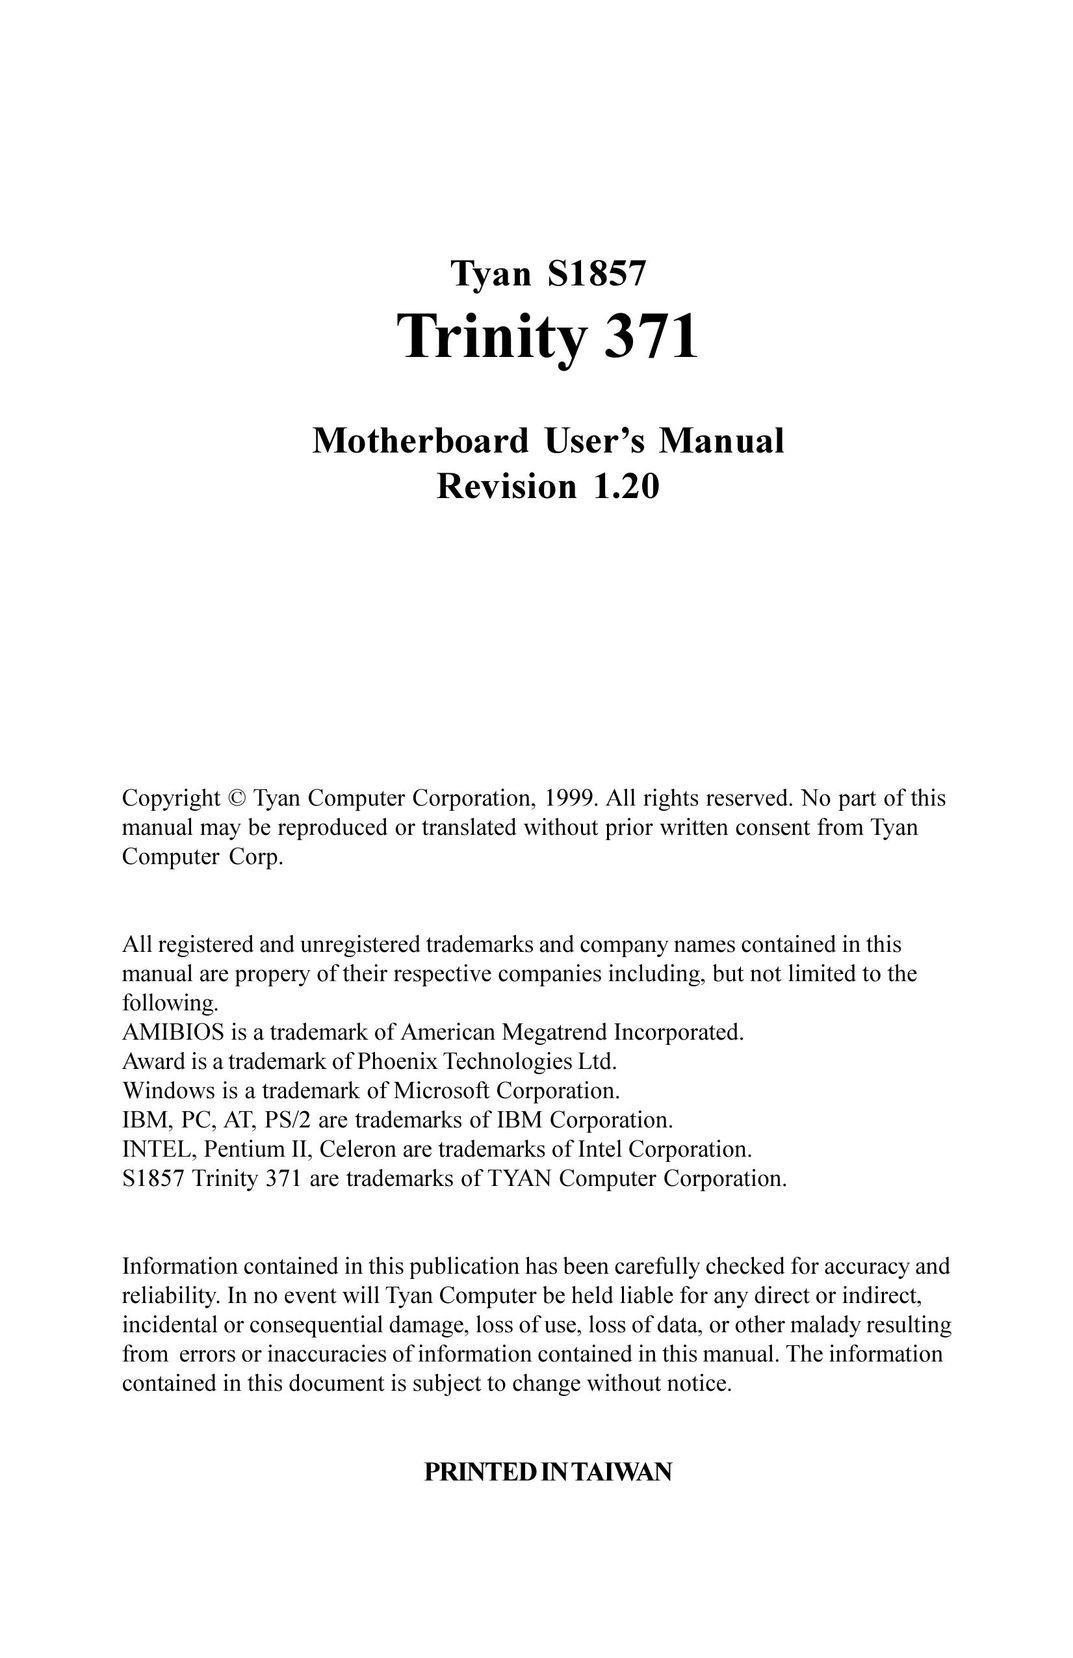 Tyan Computer Trinity 371 Motherboard Computer Hardware User Manual